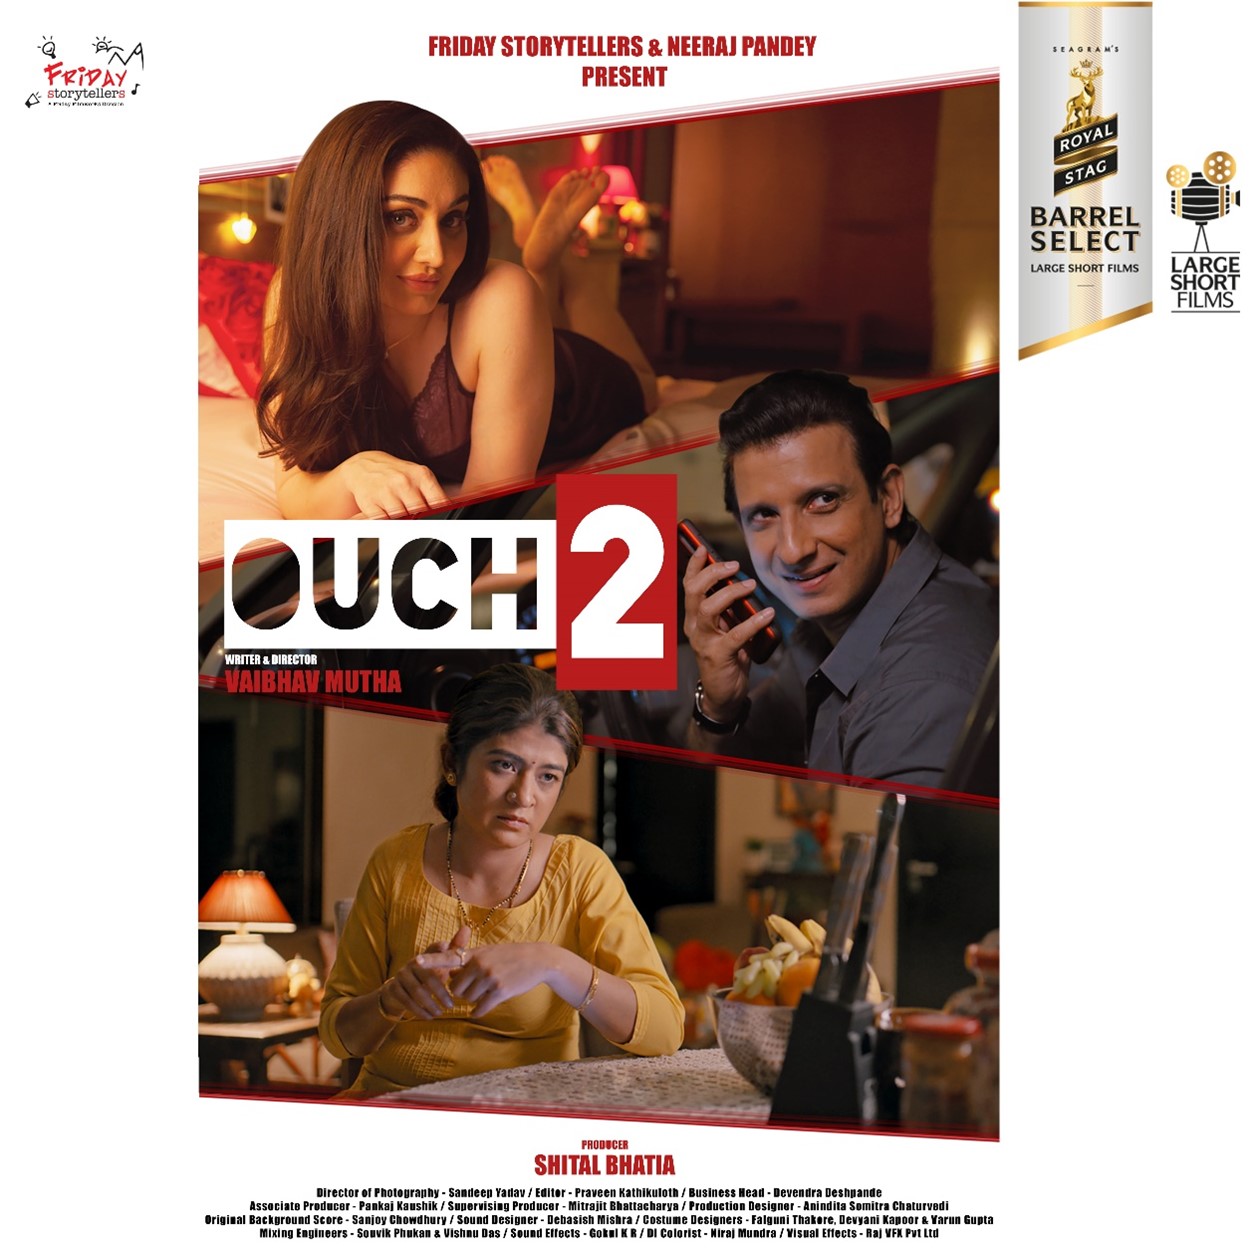 Royal Stag Barrel Select Large Short Films presents ‘Ouch 2’, a comic tale of an extra marital affair starring Sharman Joshi, Nidhi Bisht and Shefali Jariwala